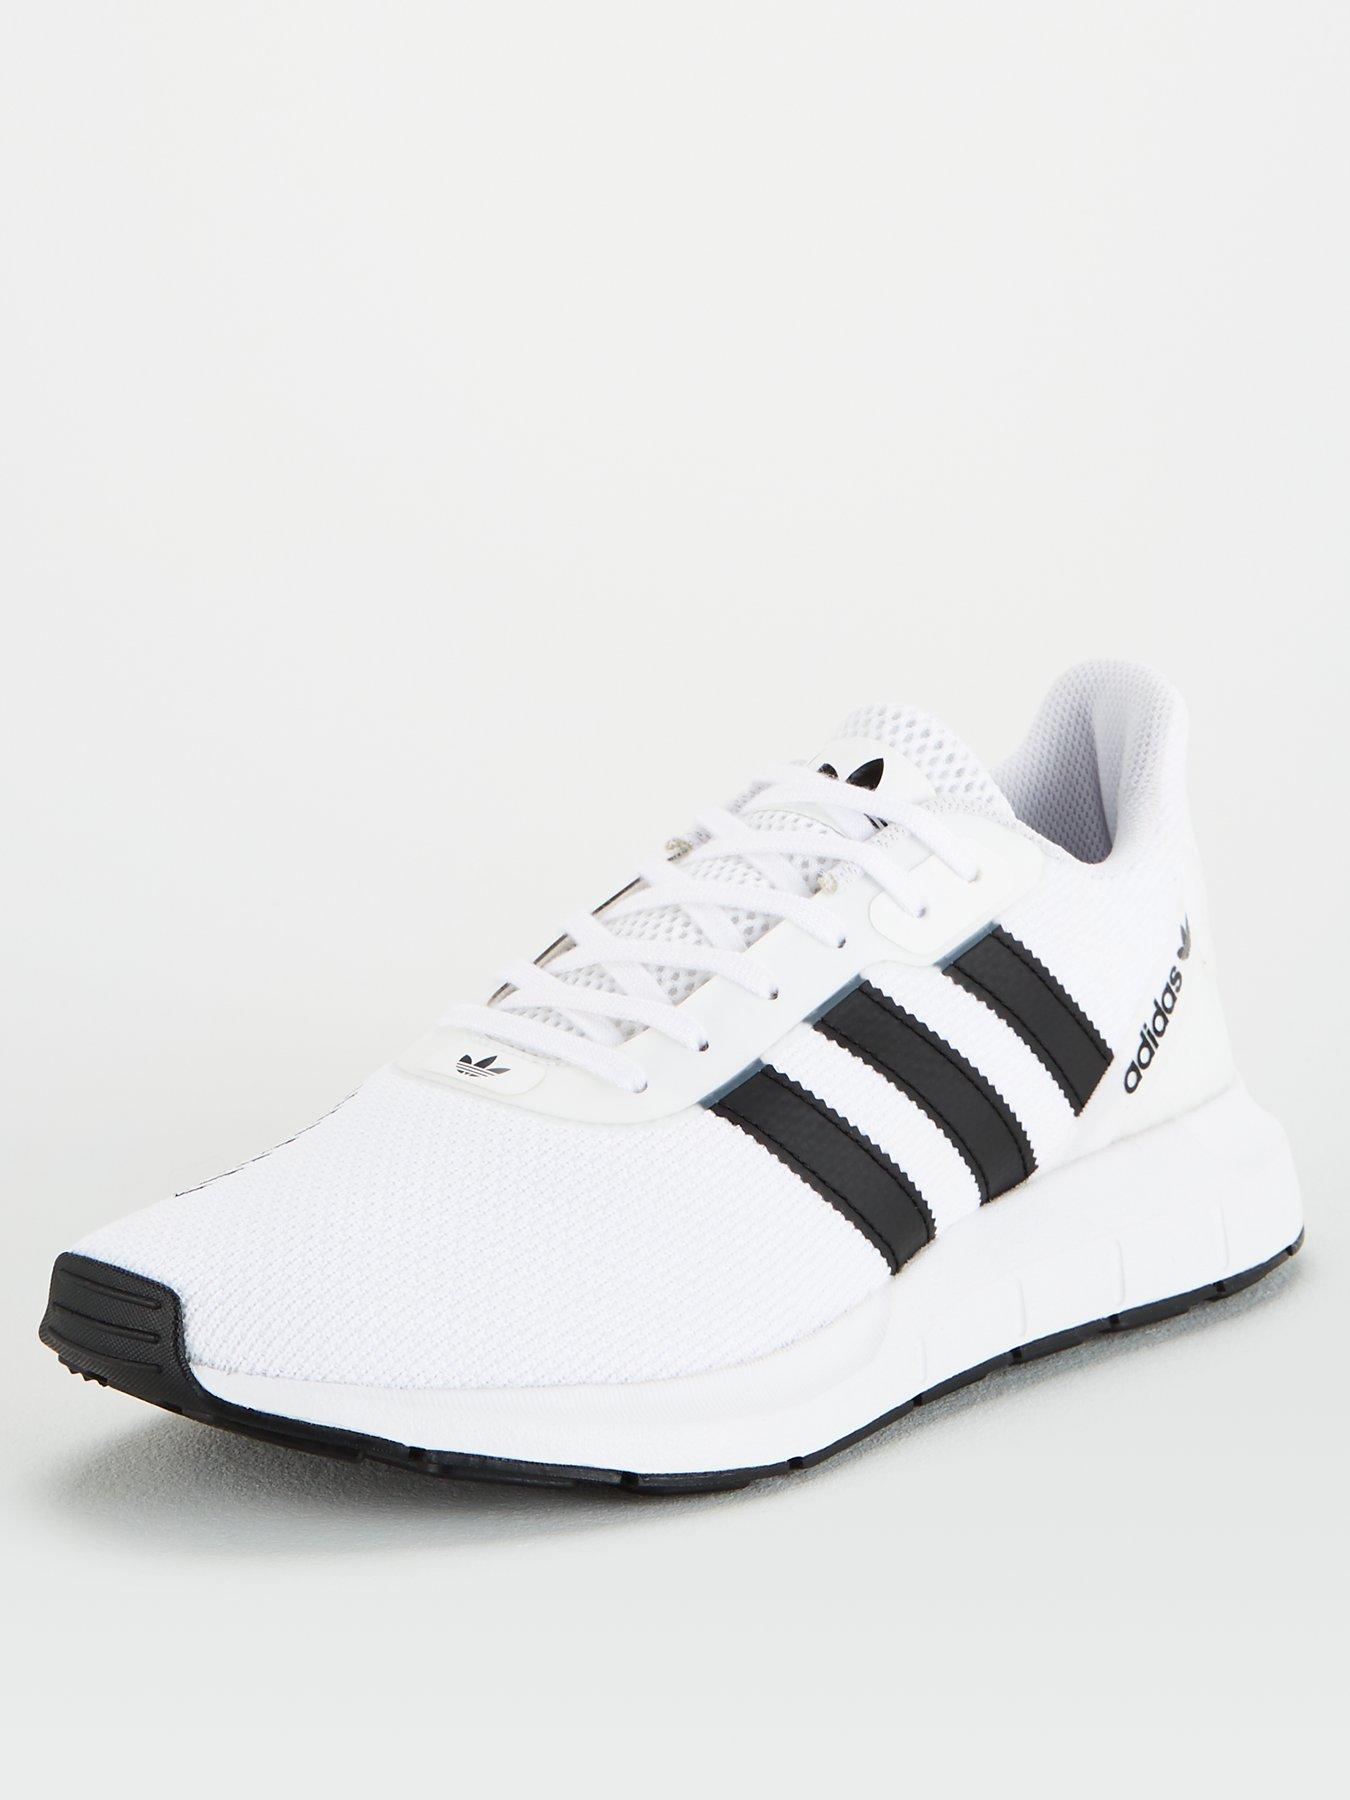 adidas swift run black with white stripes